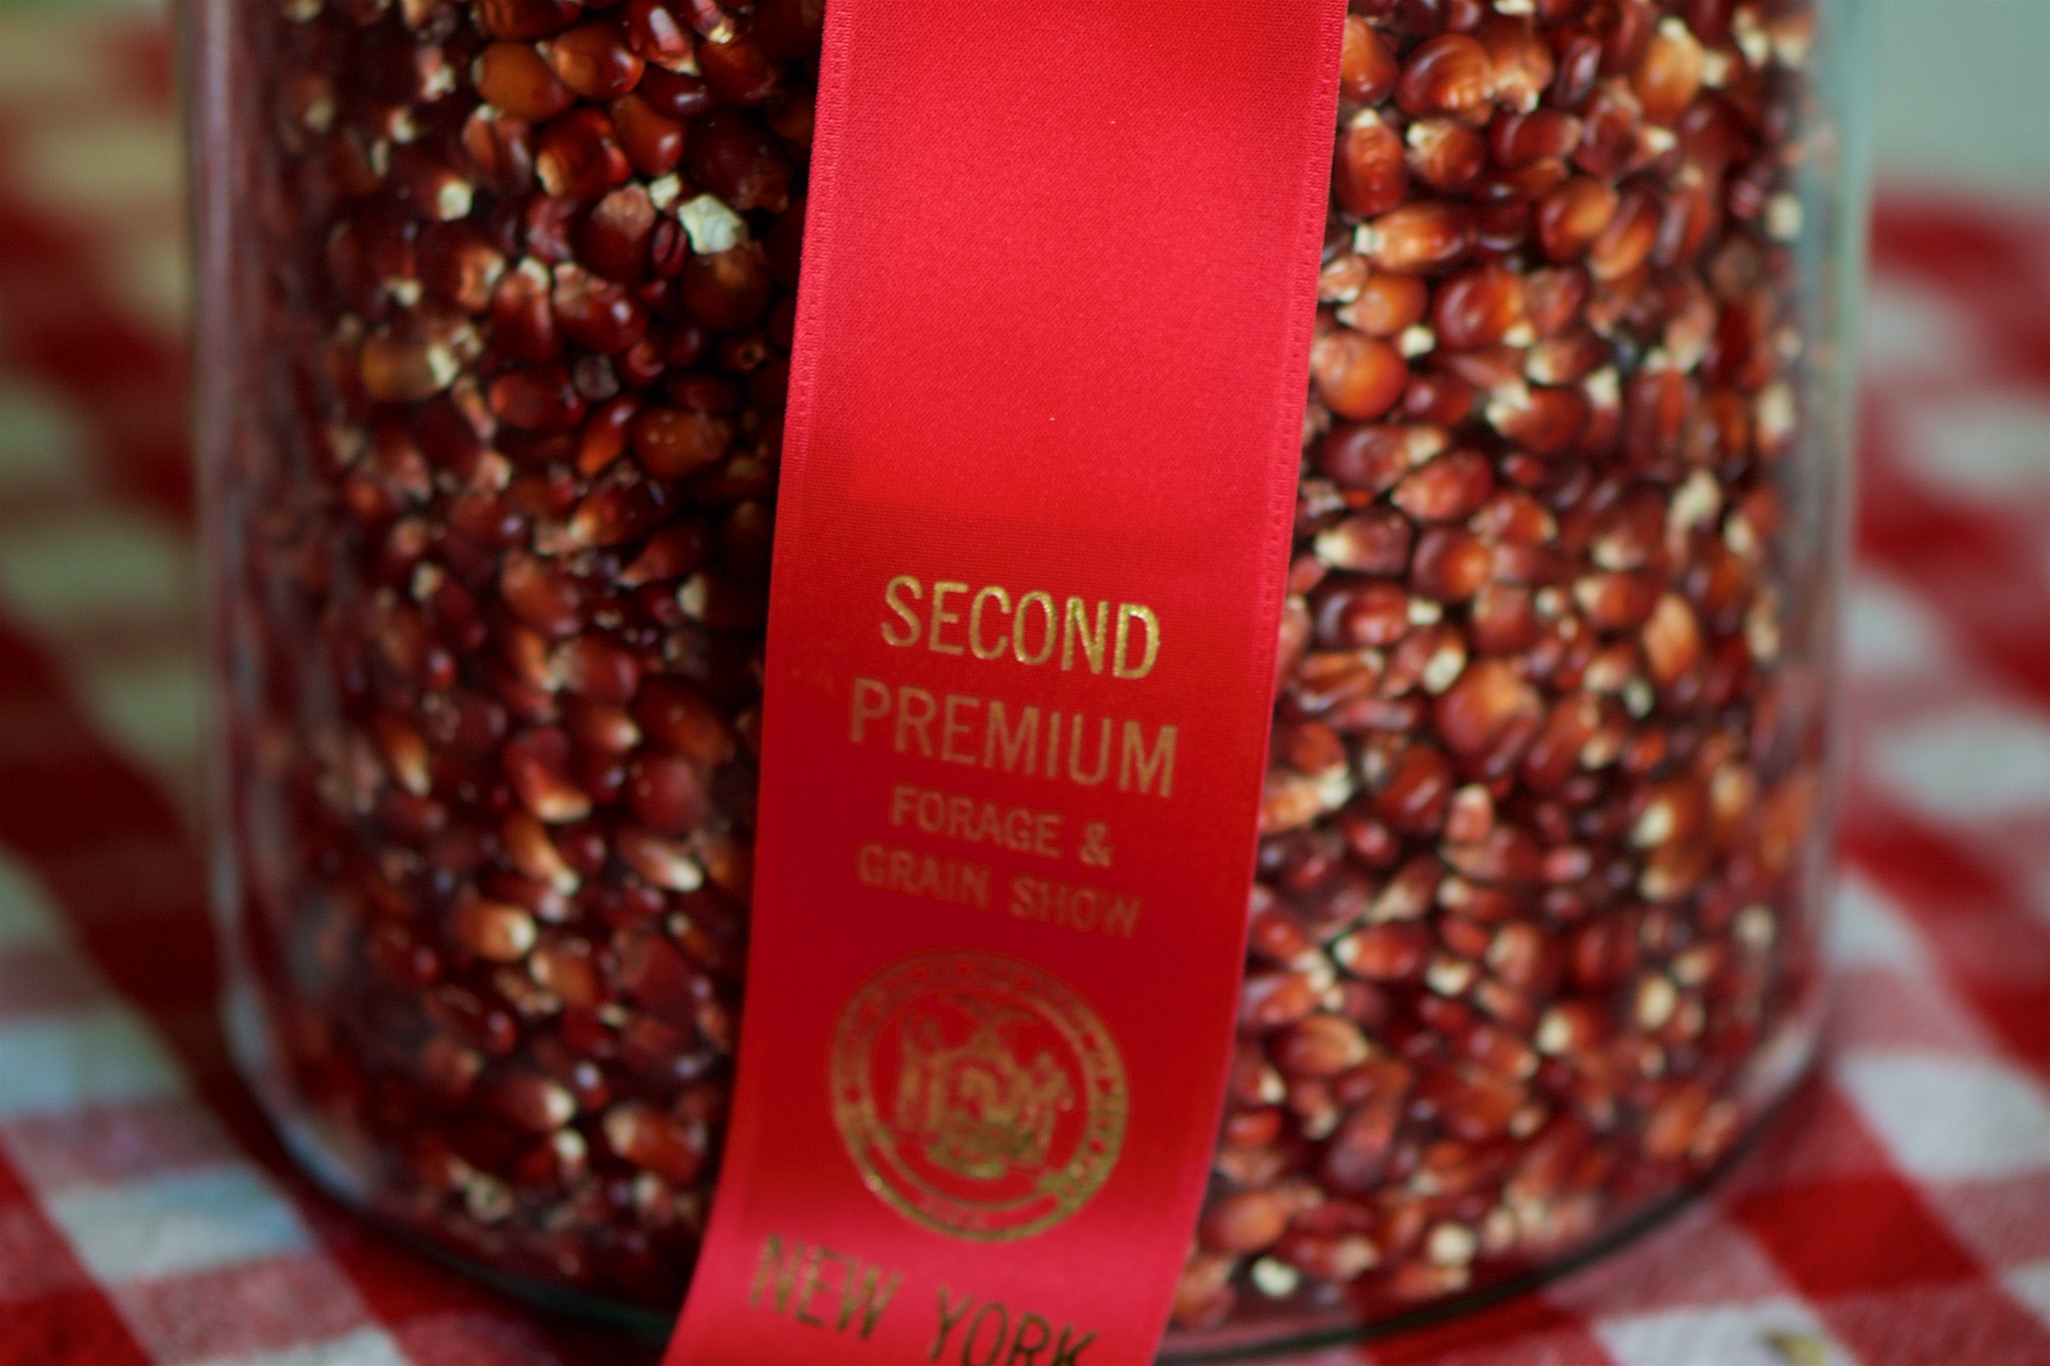 Ribbon Winning Grain at the New York State Fair in Syracuse, New York